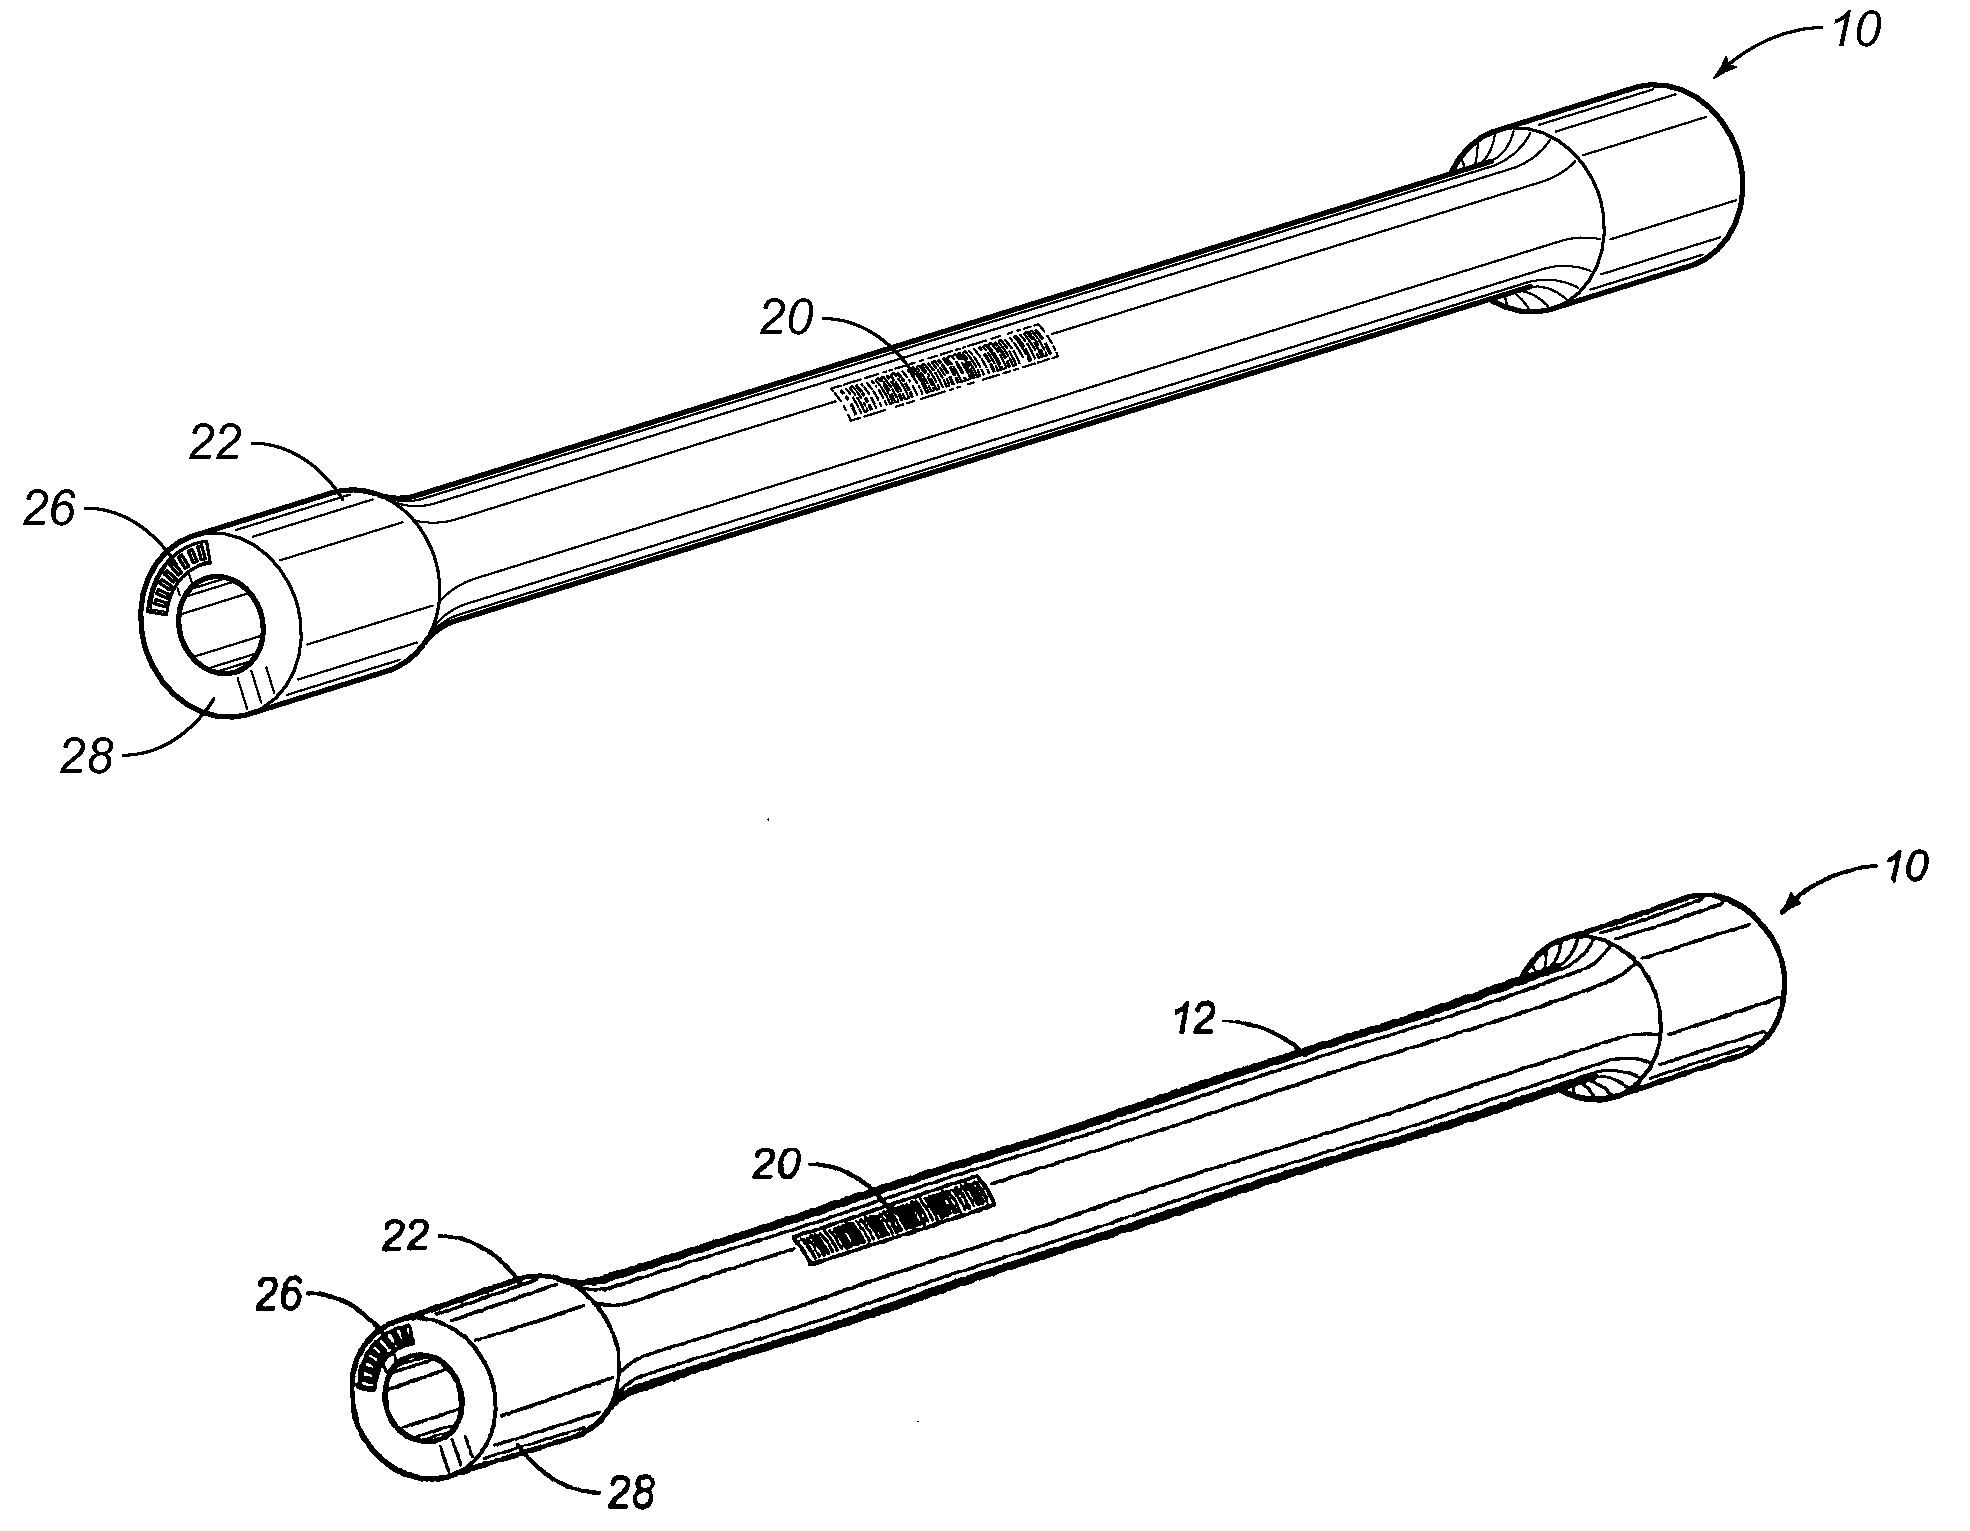 Method of making a tubular